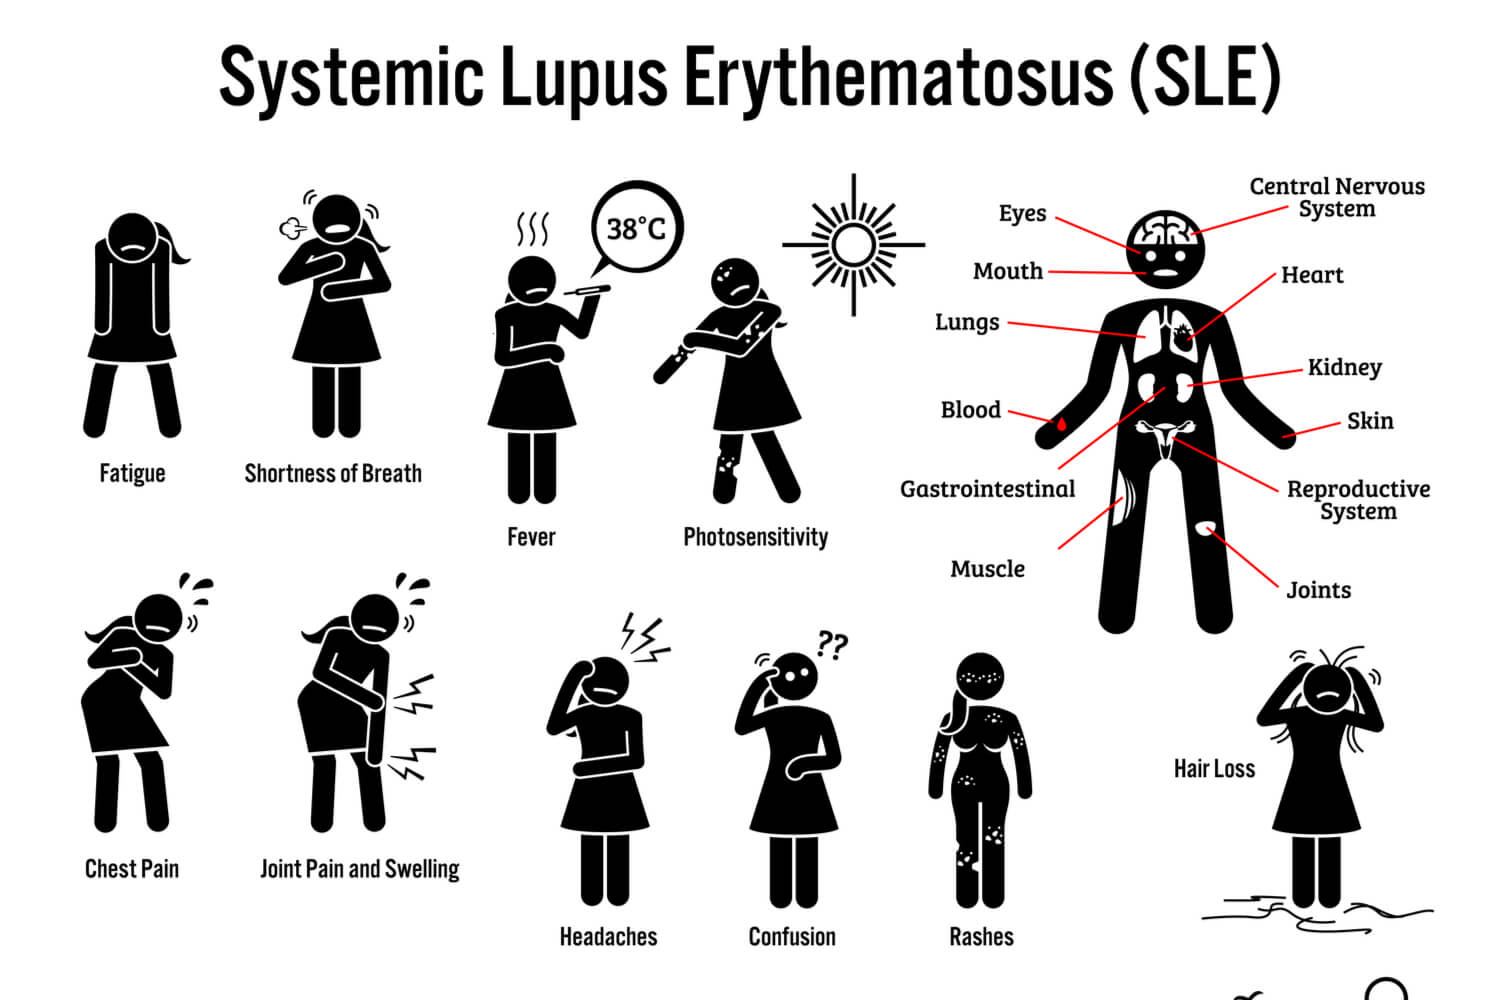 Symptoms of Systemic Lupus Erythematosus